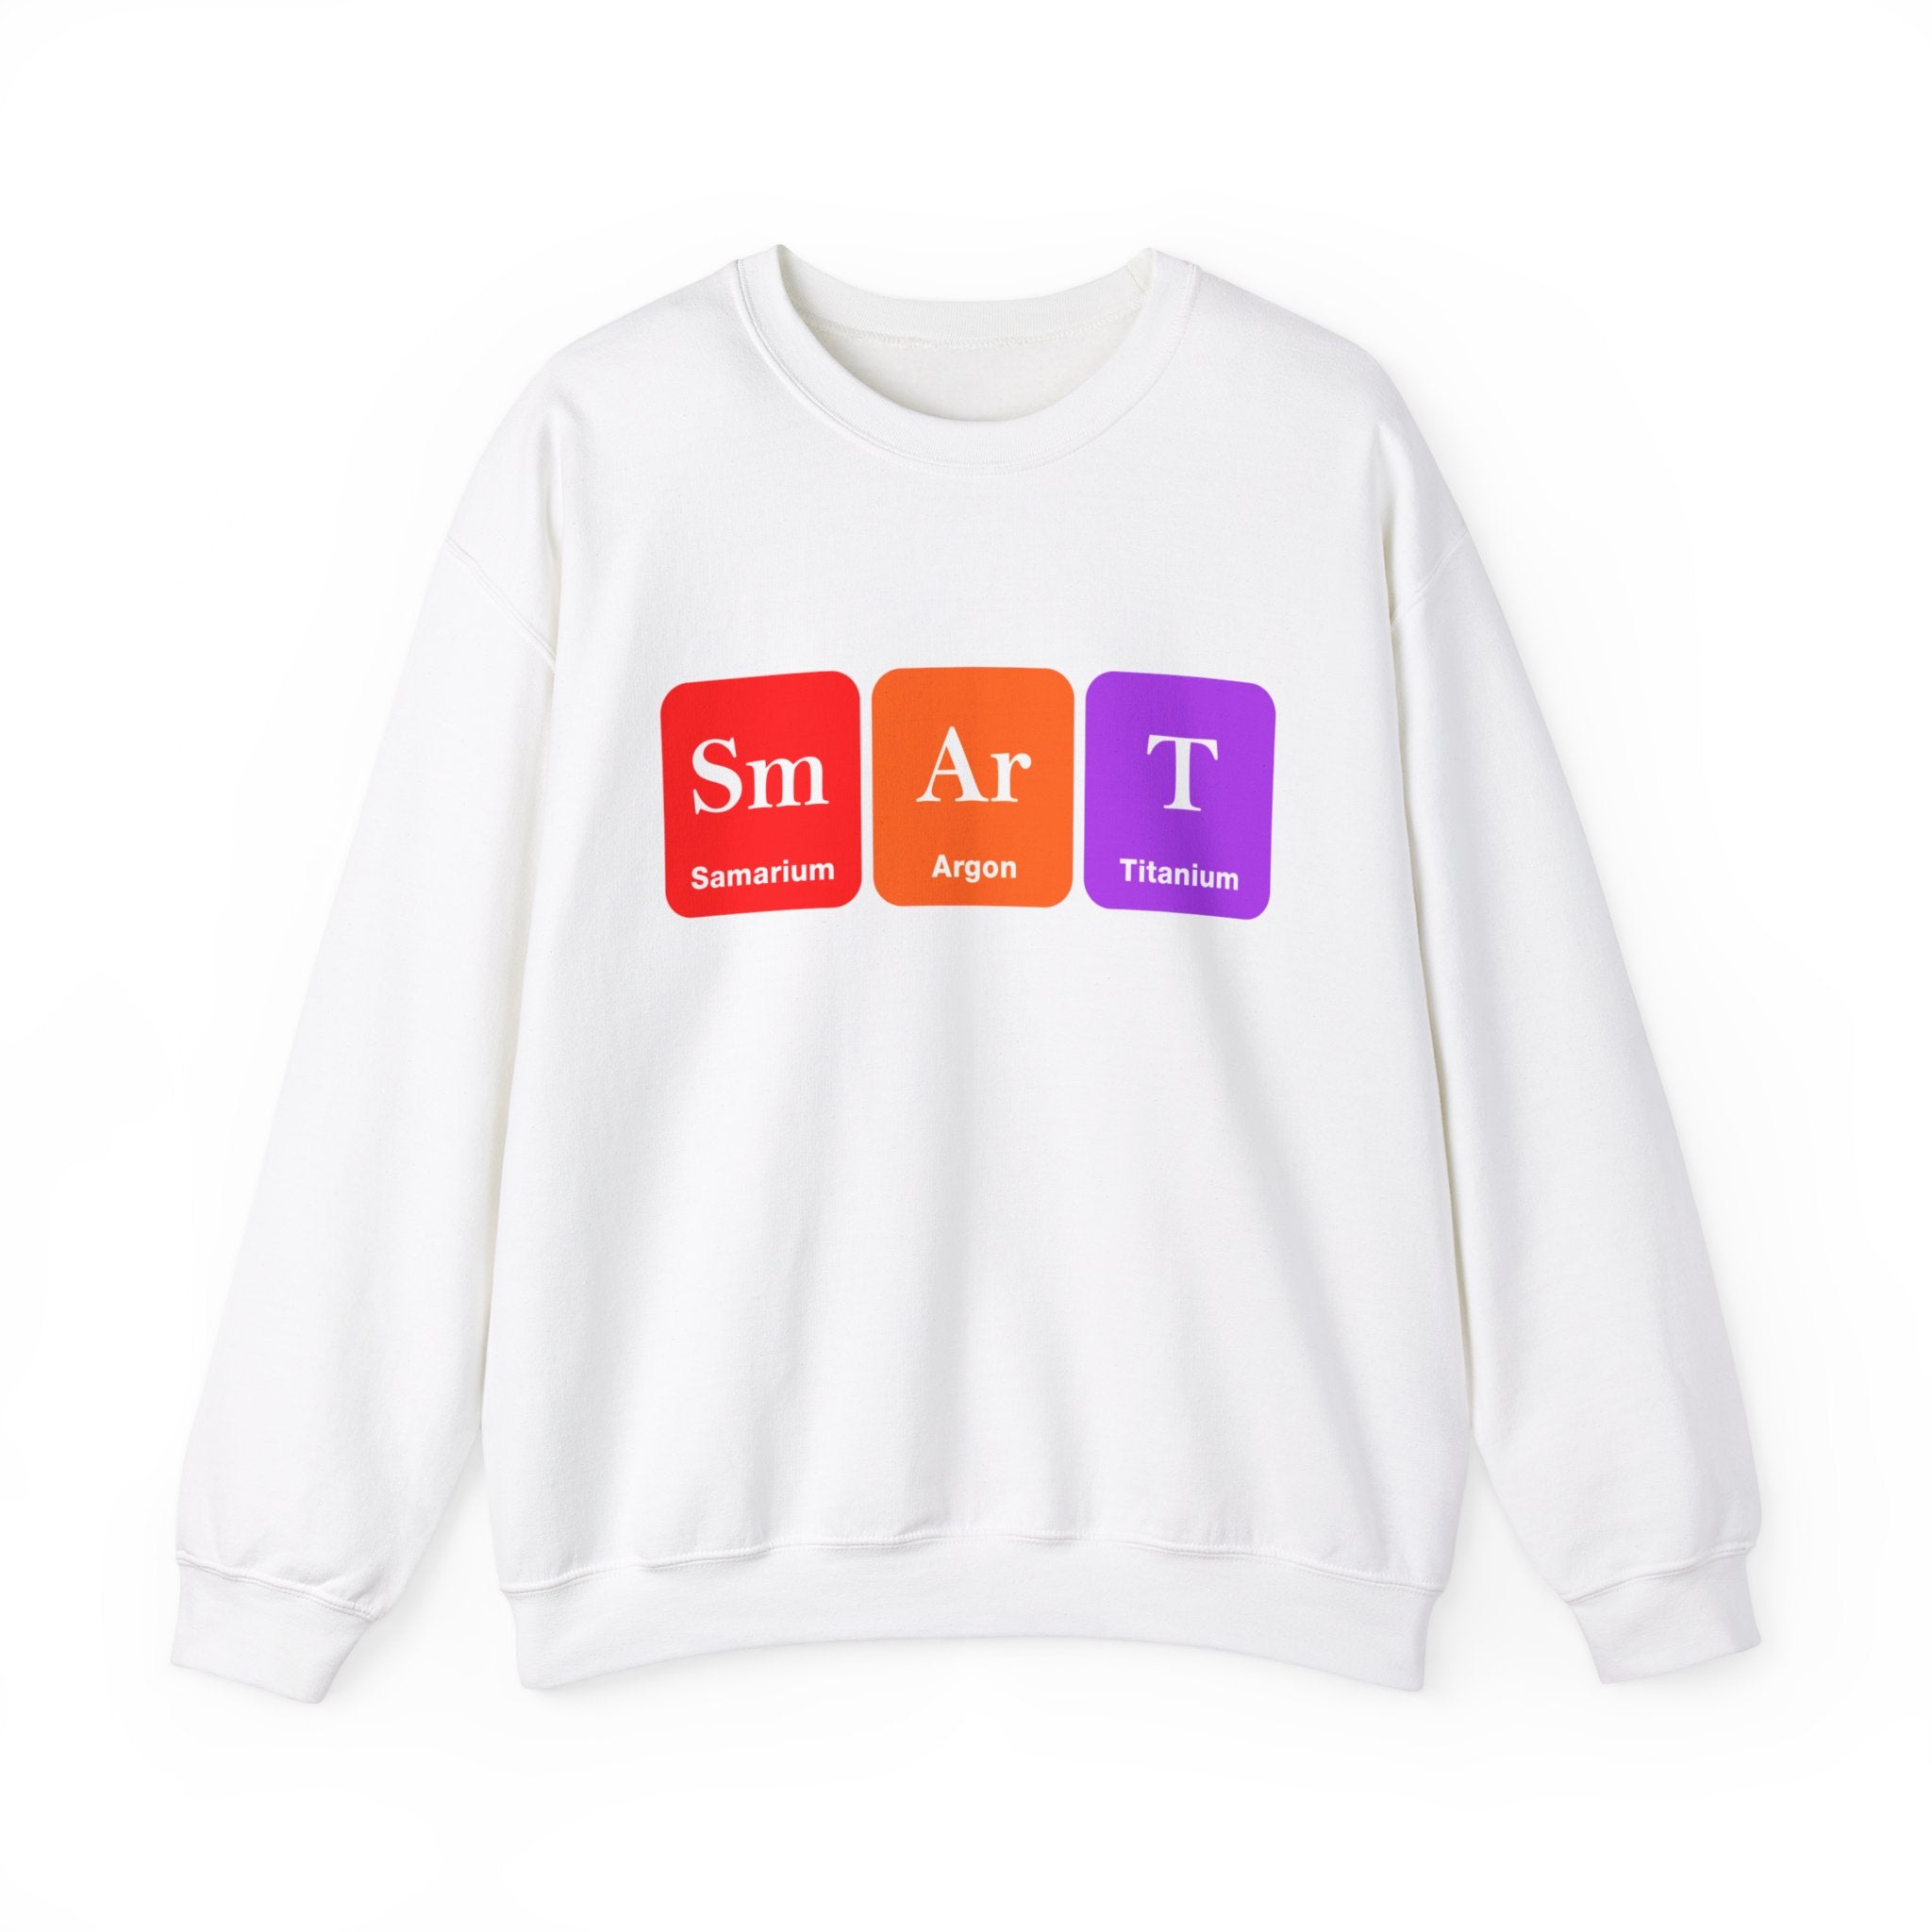 Sm-Ar-T -  Sweatshirt